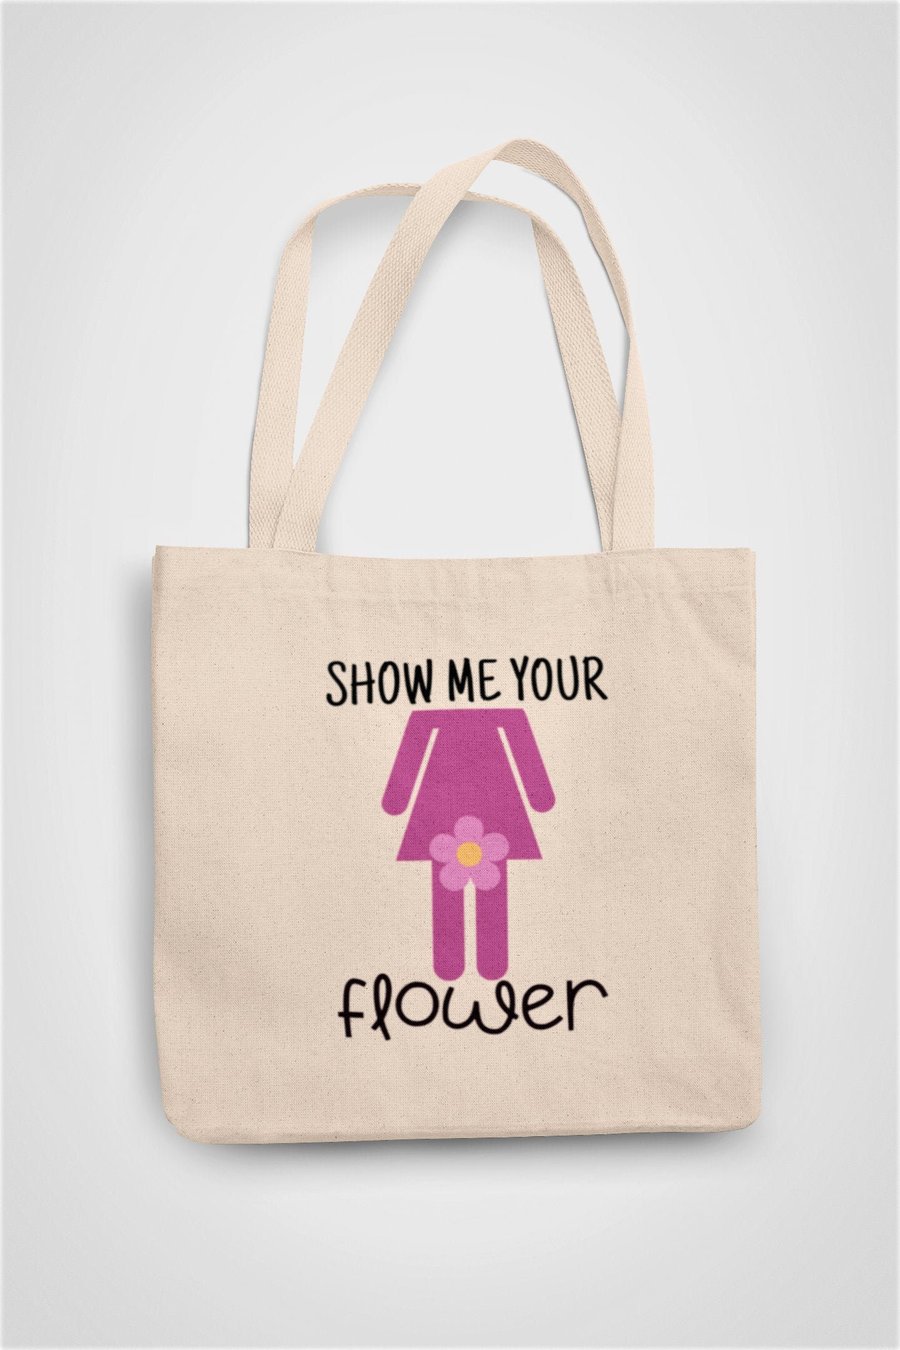 Show me your Flower Outdoor Garden Tote Bag Reusable Cotton bag - Novelty funny 